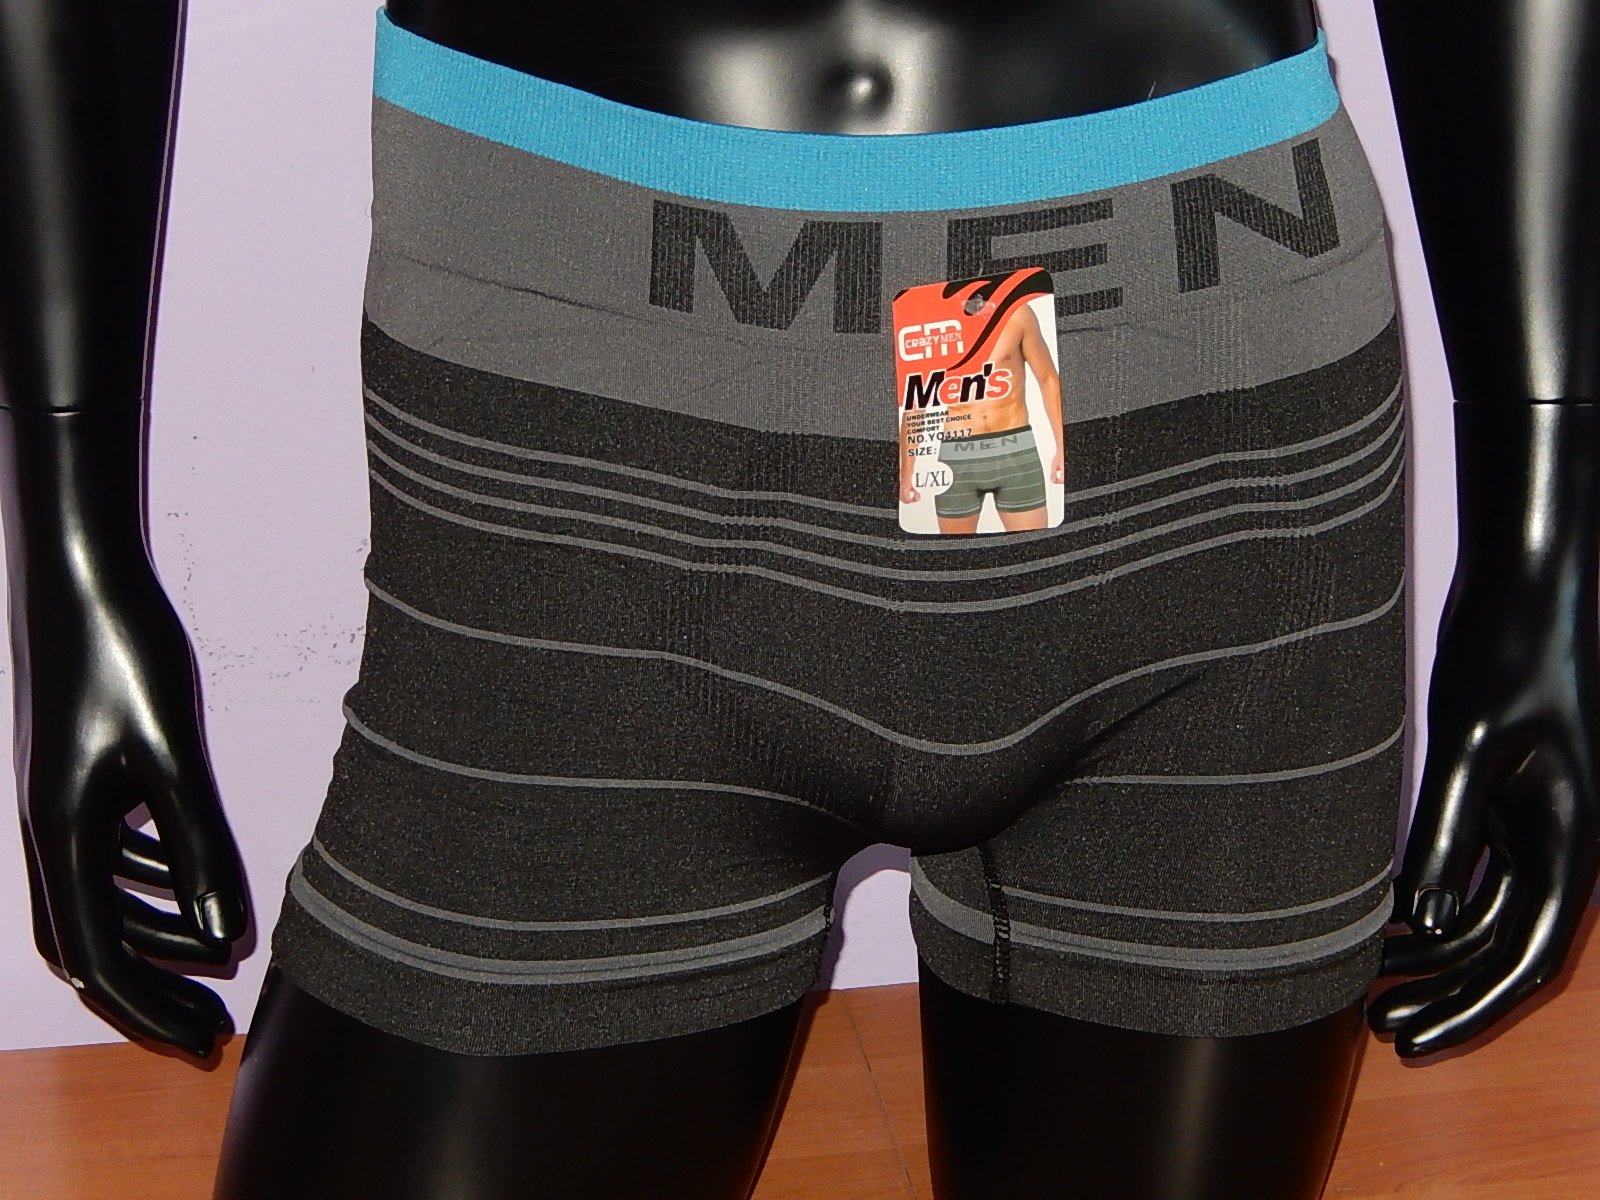 Pánské boxerky s nápisem MEN